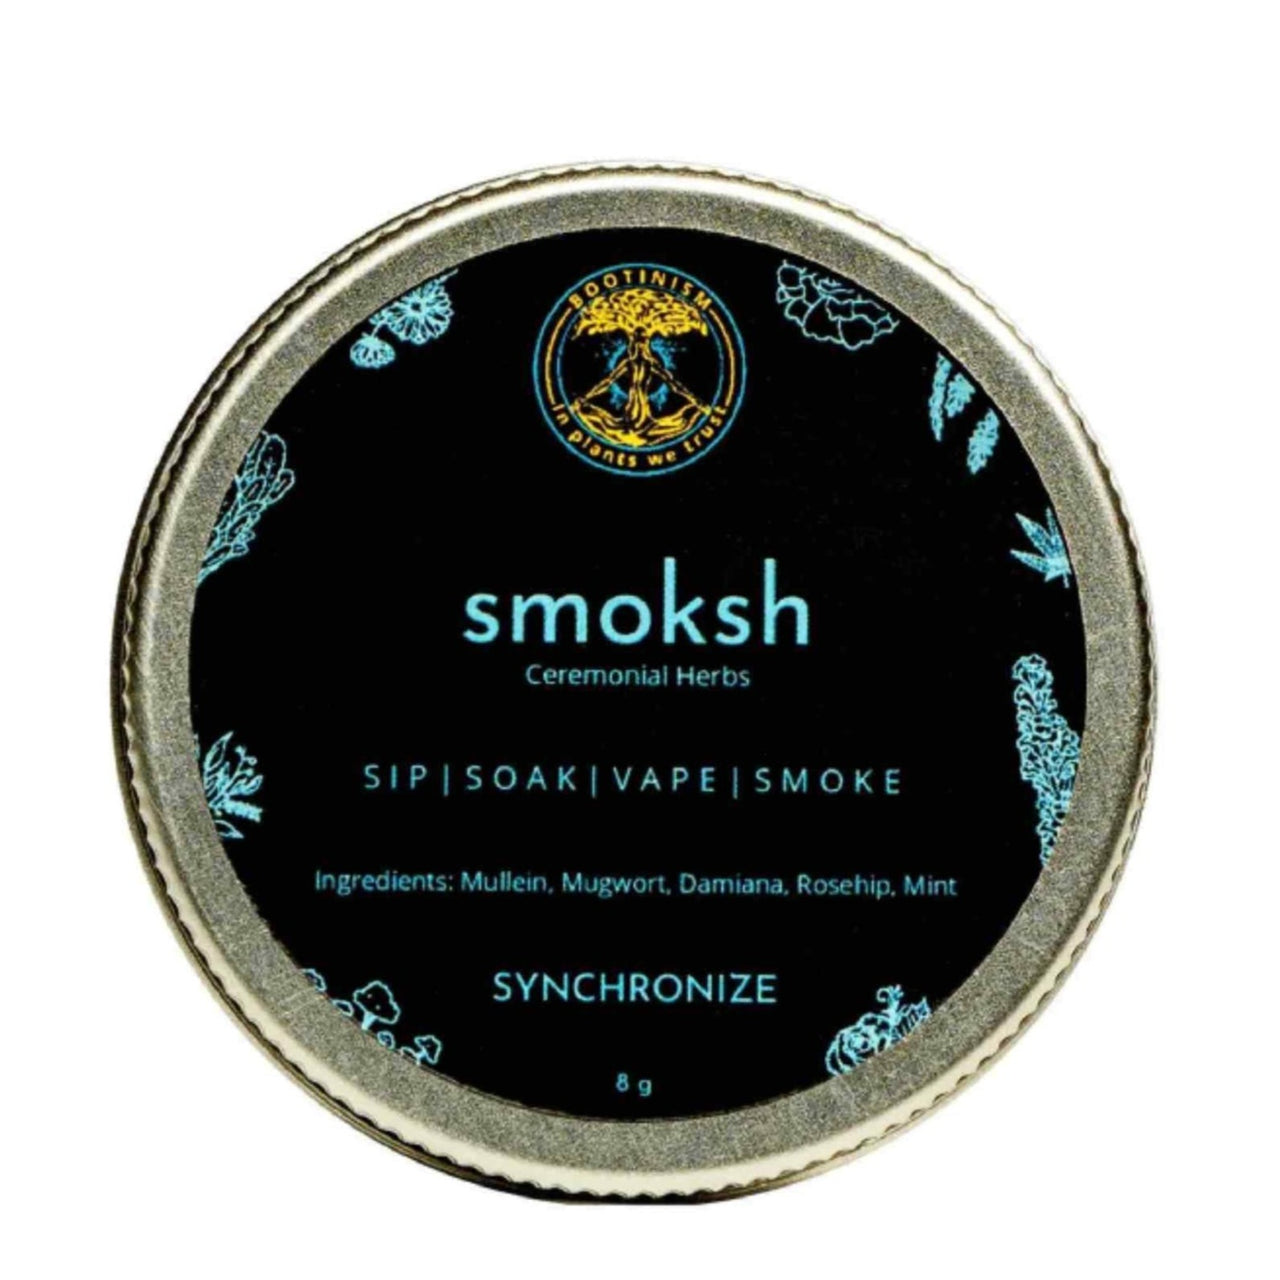 Smoksh by Bootinism - Synchronize 8g Tin & Synchronize 30g Pouch - CBD Store India